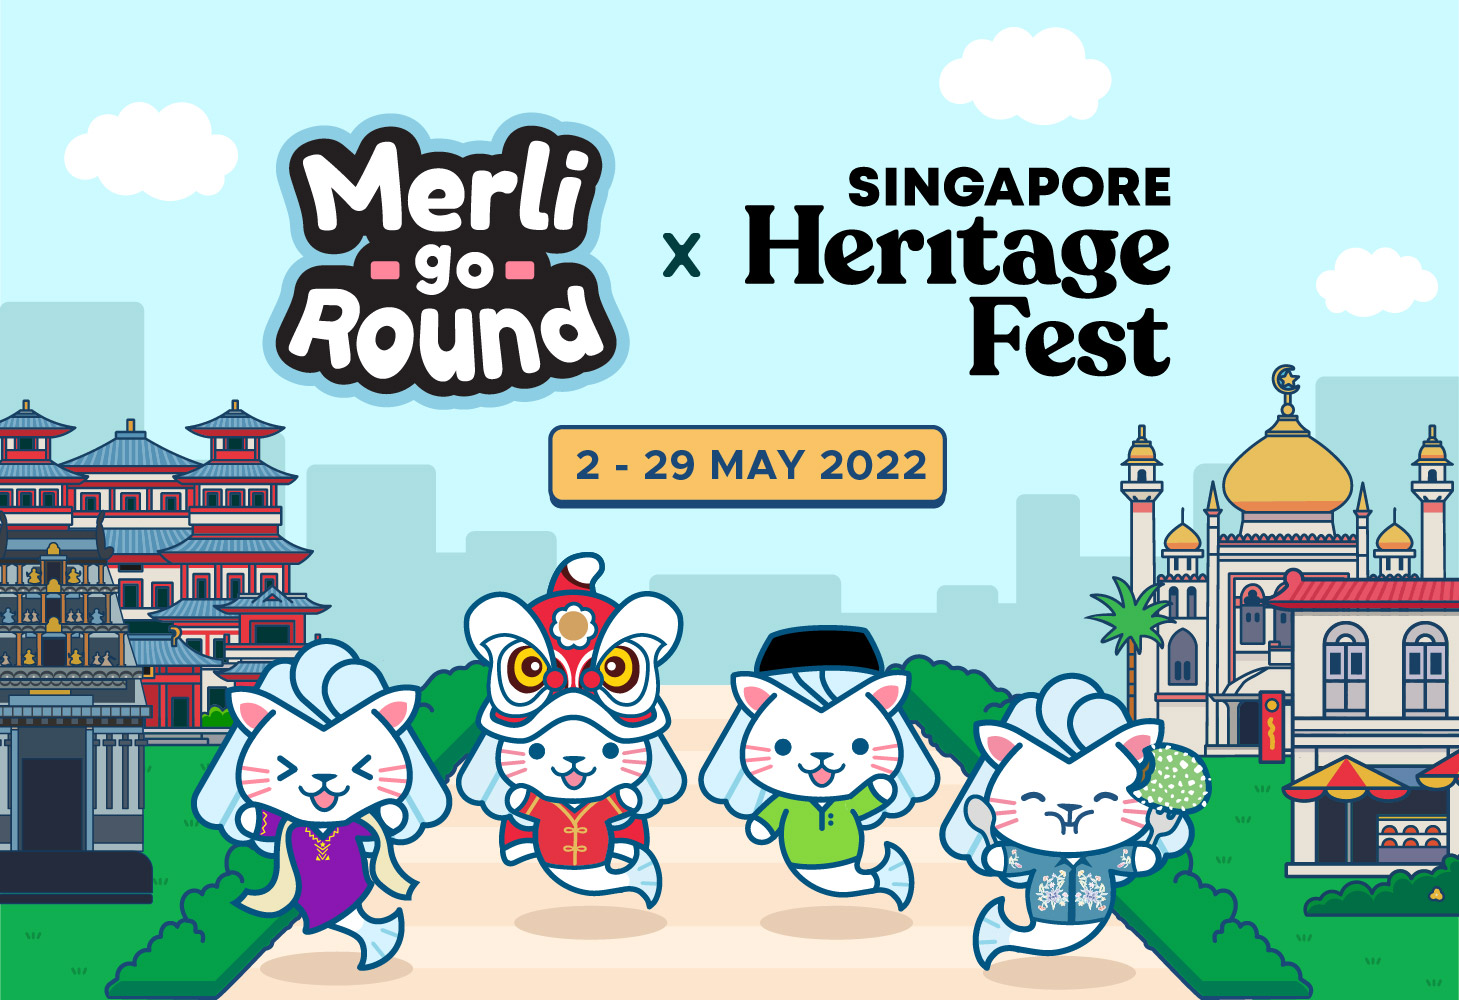 Merli-go-Round-to-Singapore-HeritageFest